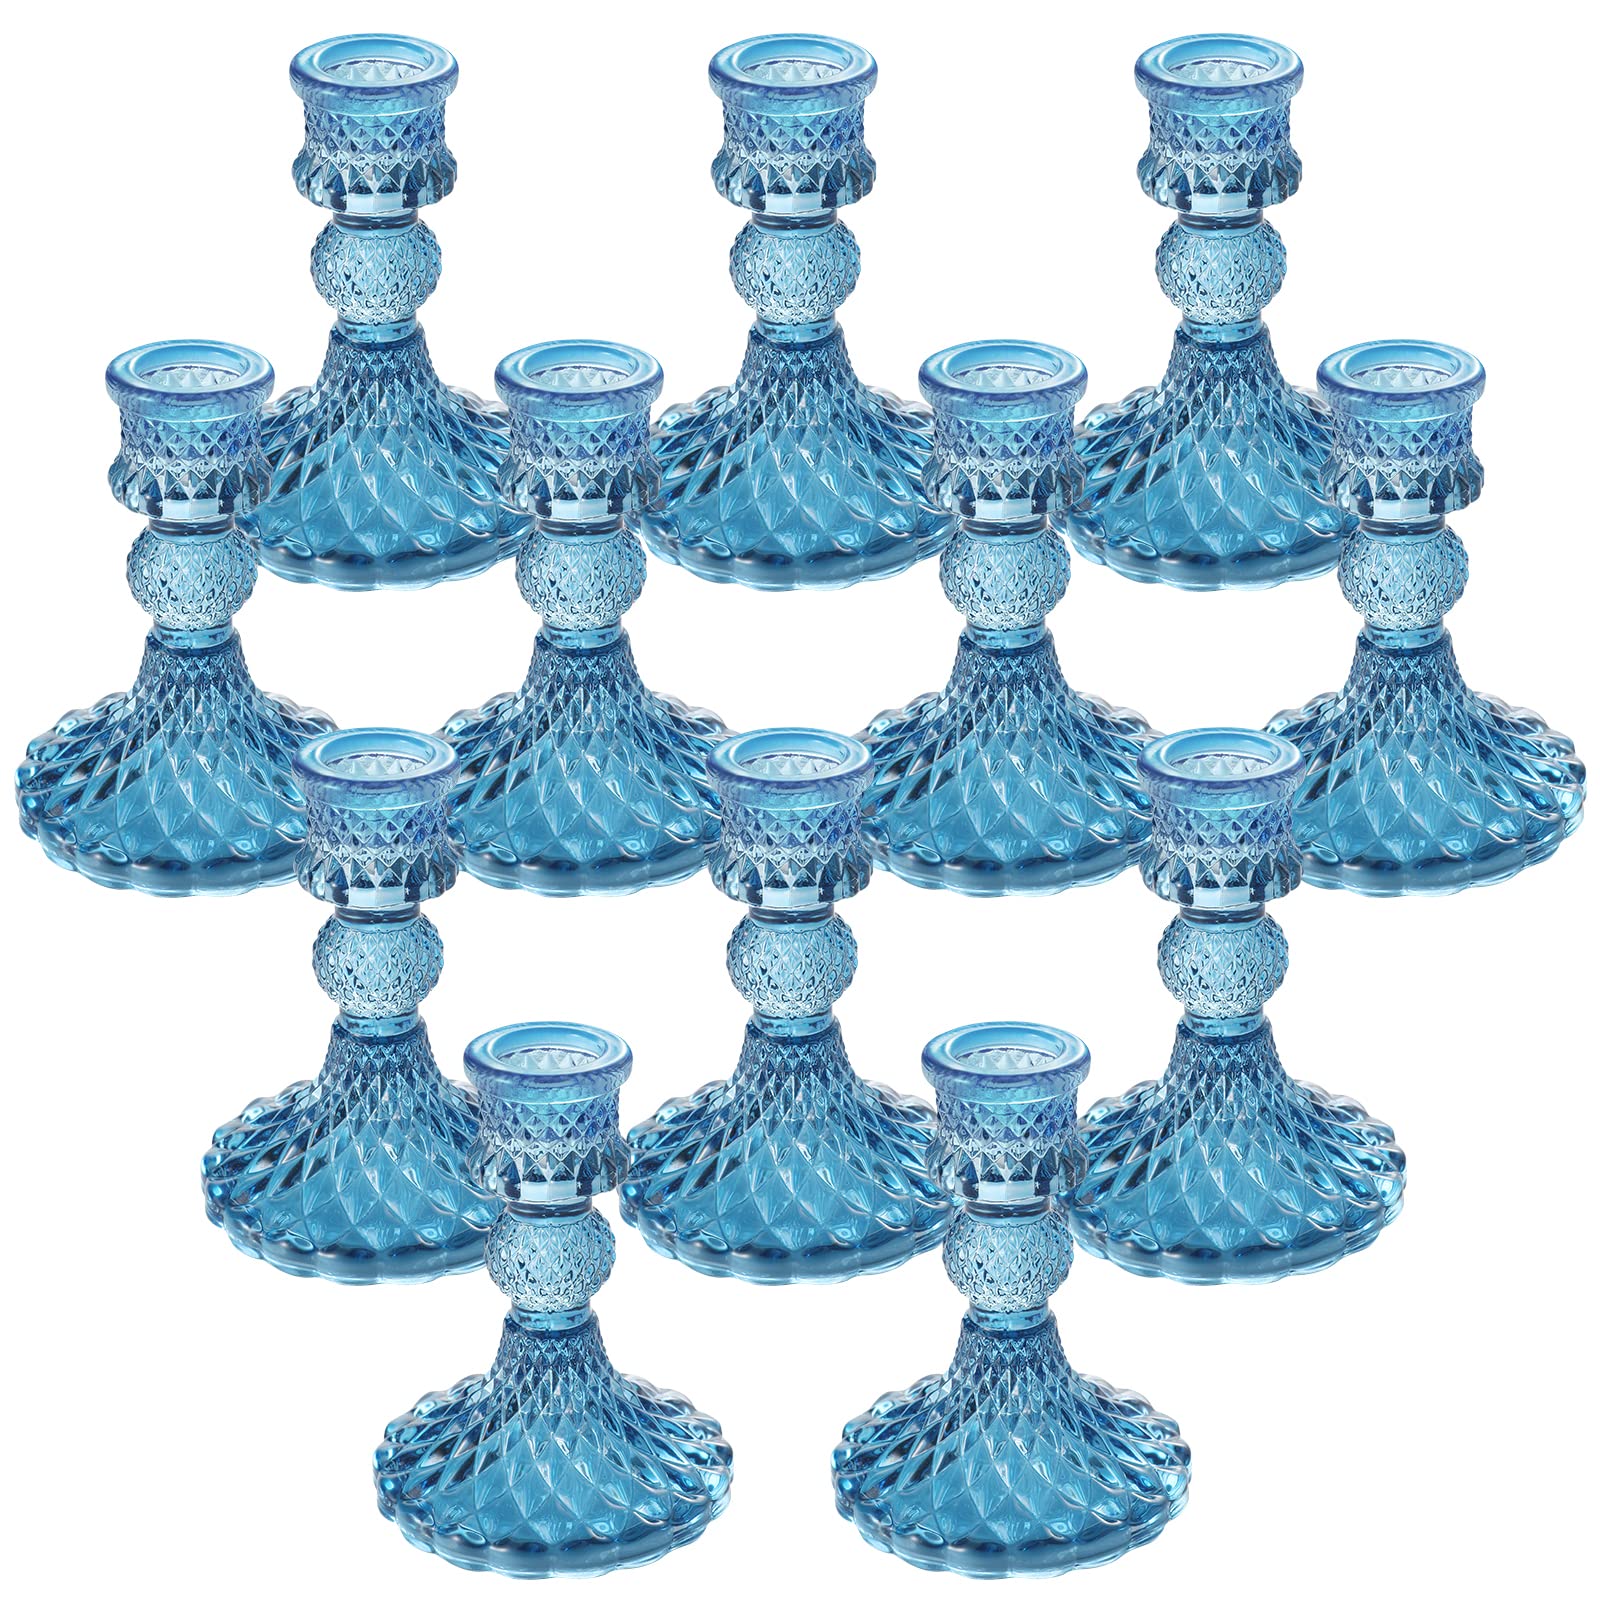 IYOUYA Glass Candlestick Holders 12Pcs, 4" Taper Candle Holders, Blue Glass Taper Candle Holders for Wedding, Festival & Anniver